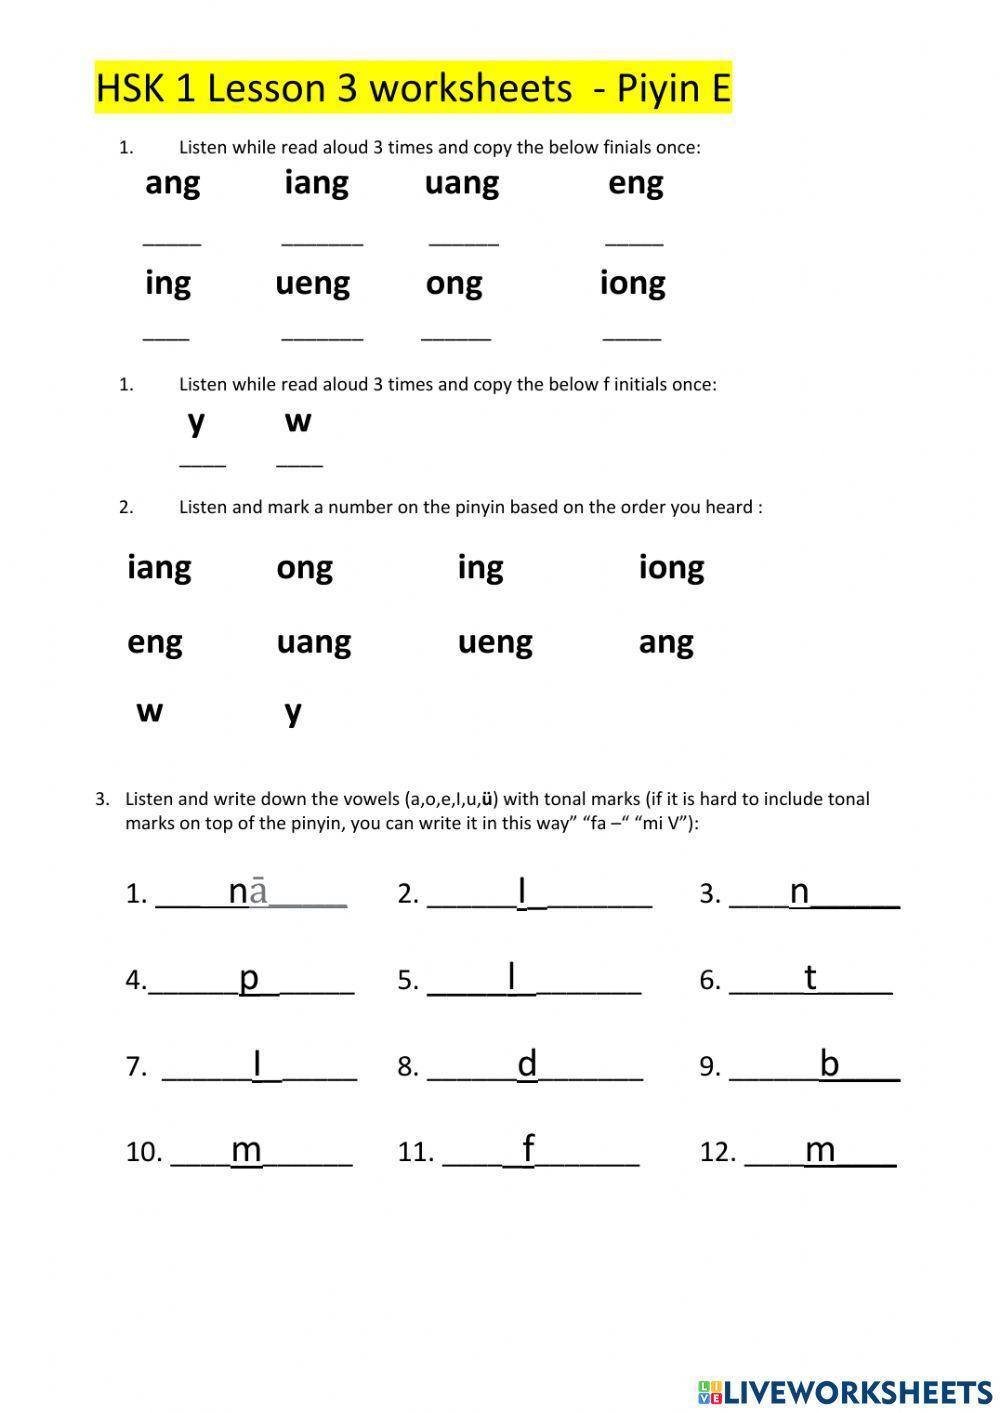 HSK 1 Lesson 3 pinyin E